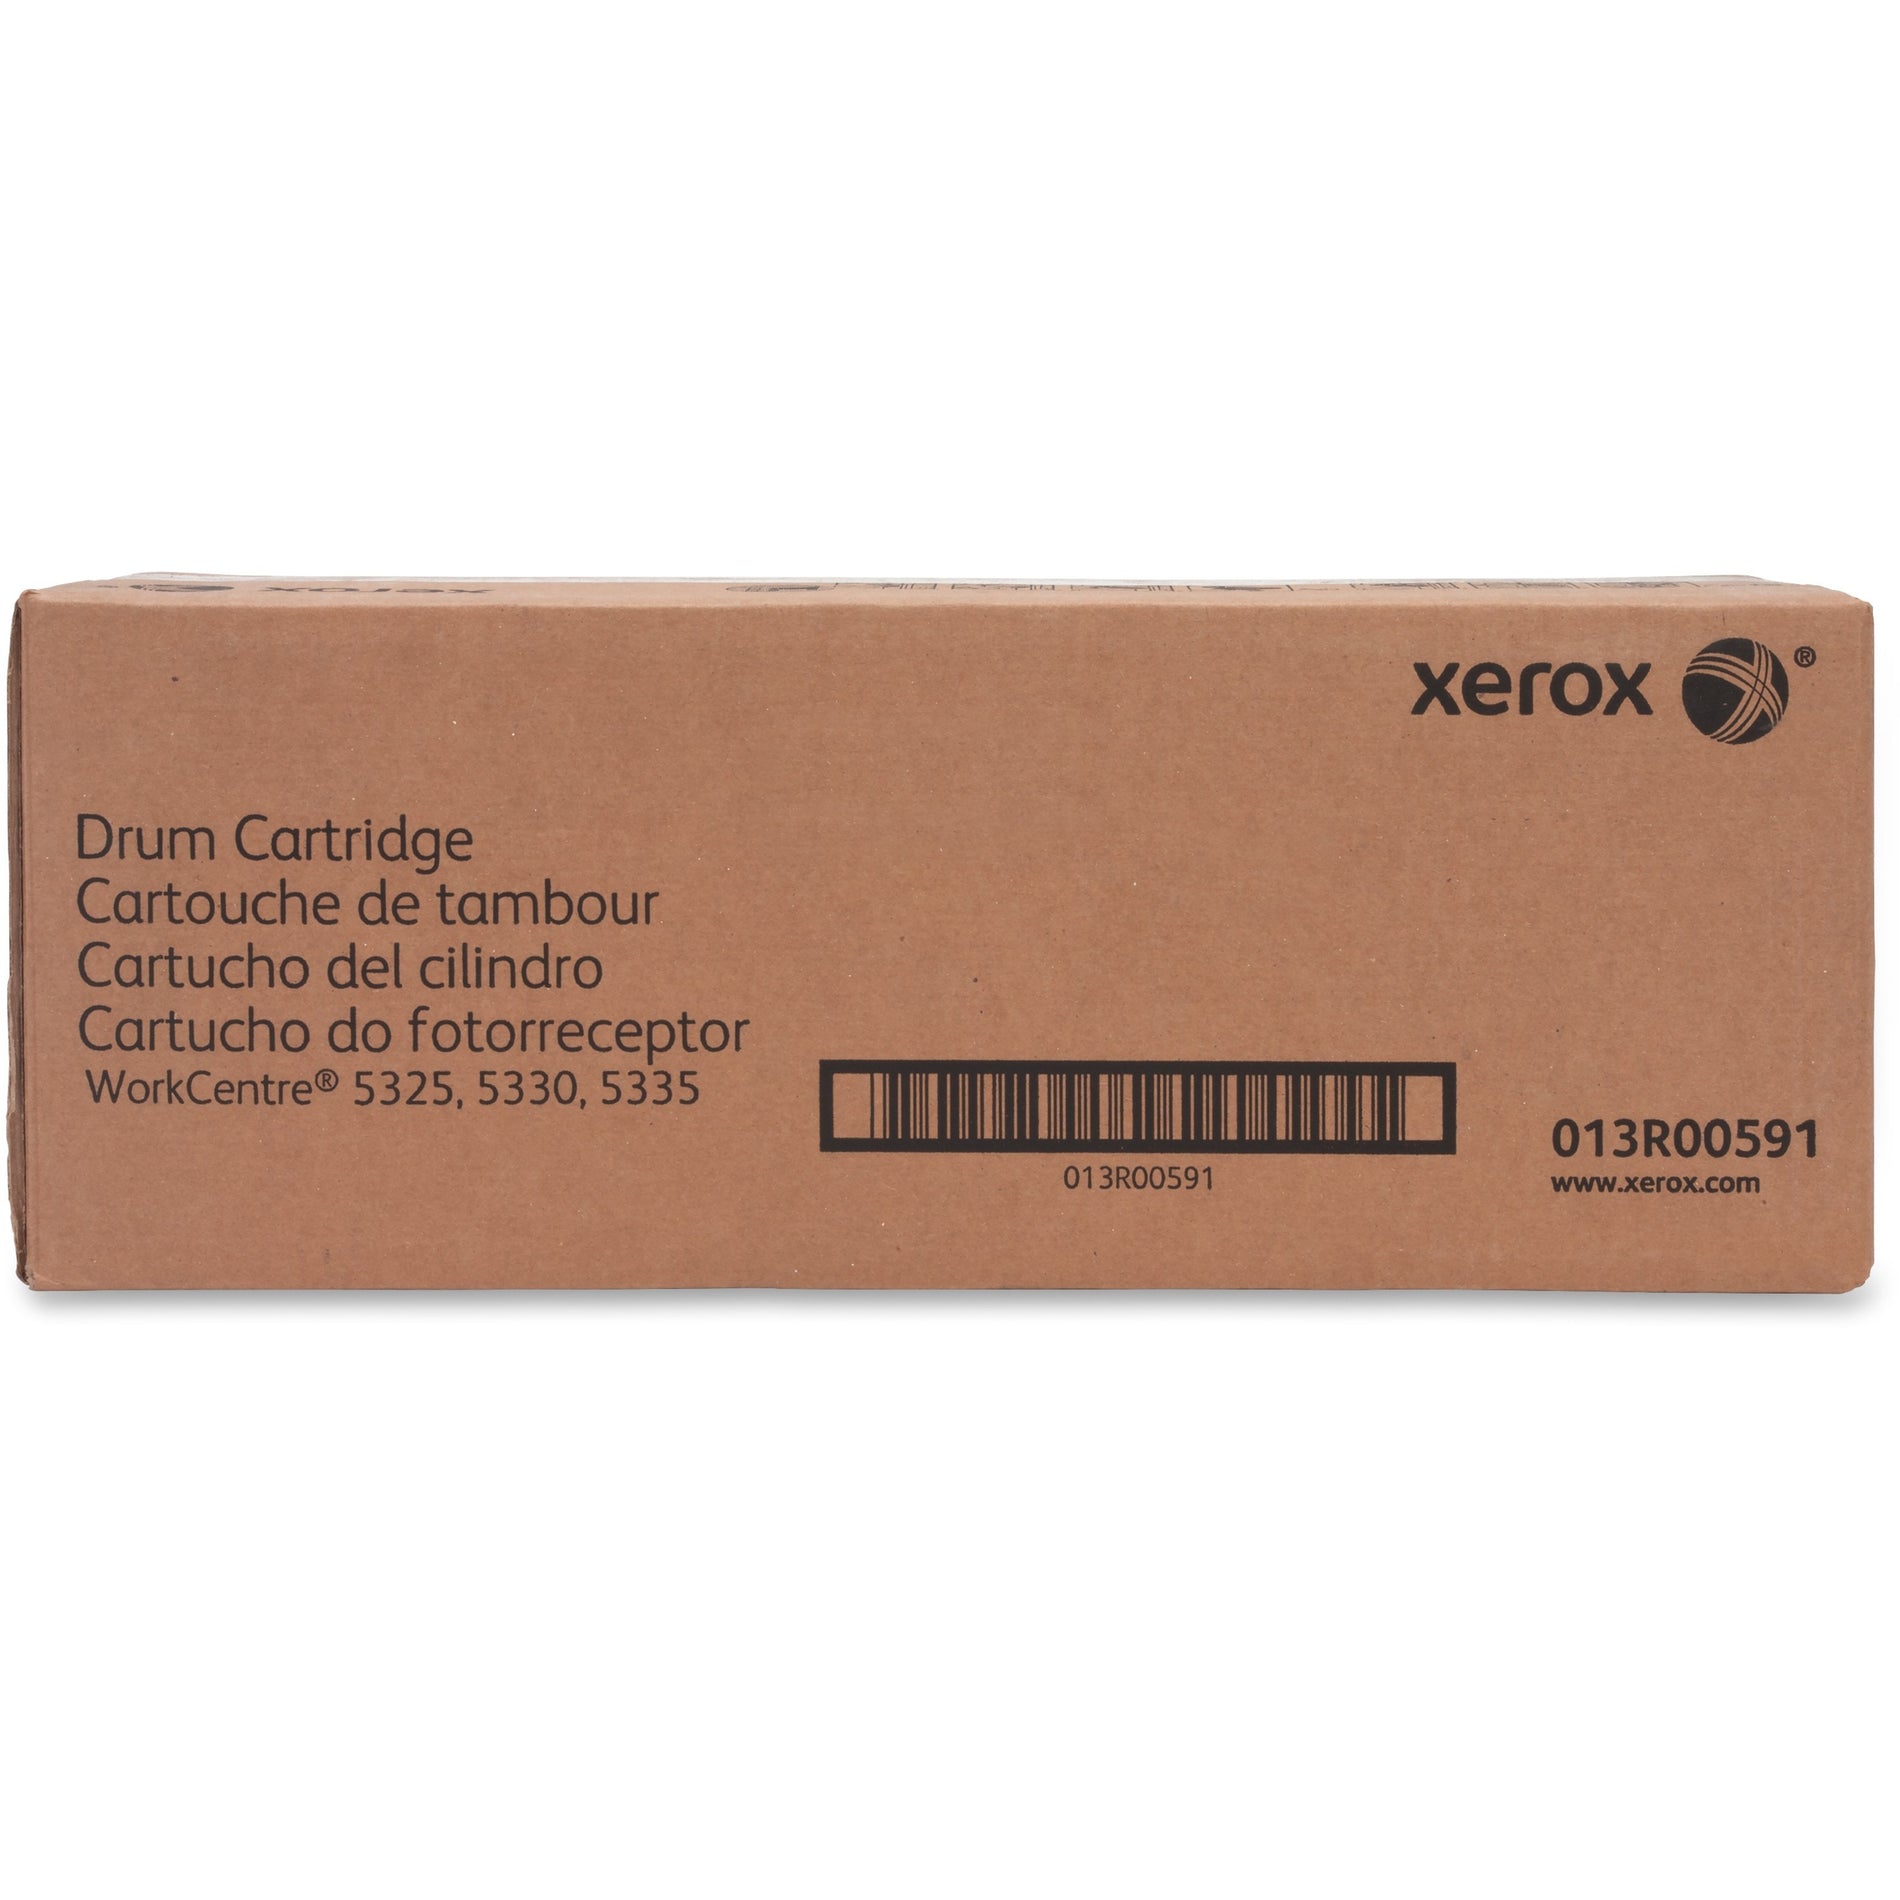 Xerox 013R00591 WorkCentre 5300 Drum Cartridge, 96,000 Page Yield, Black